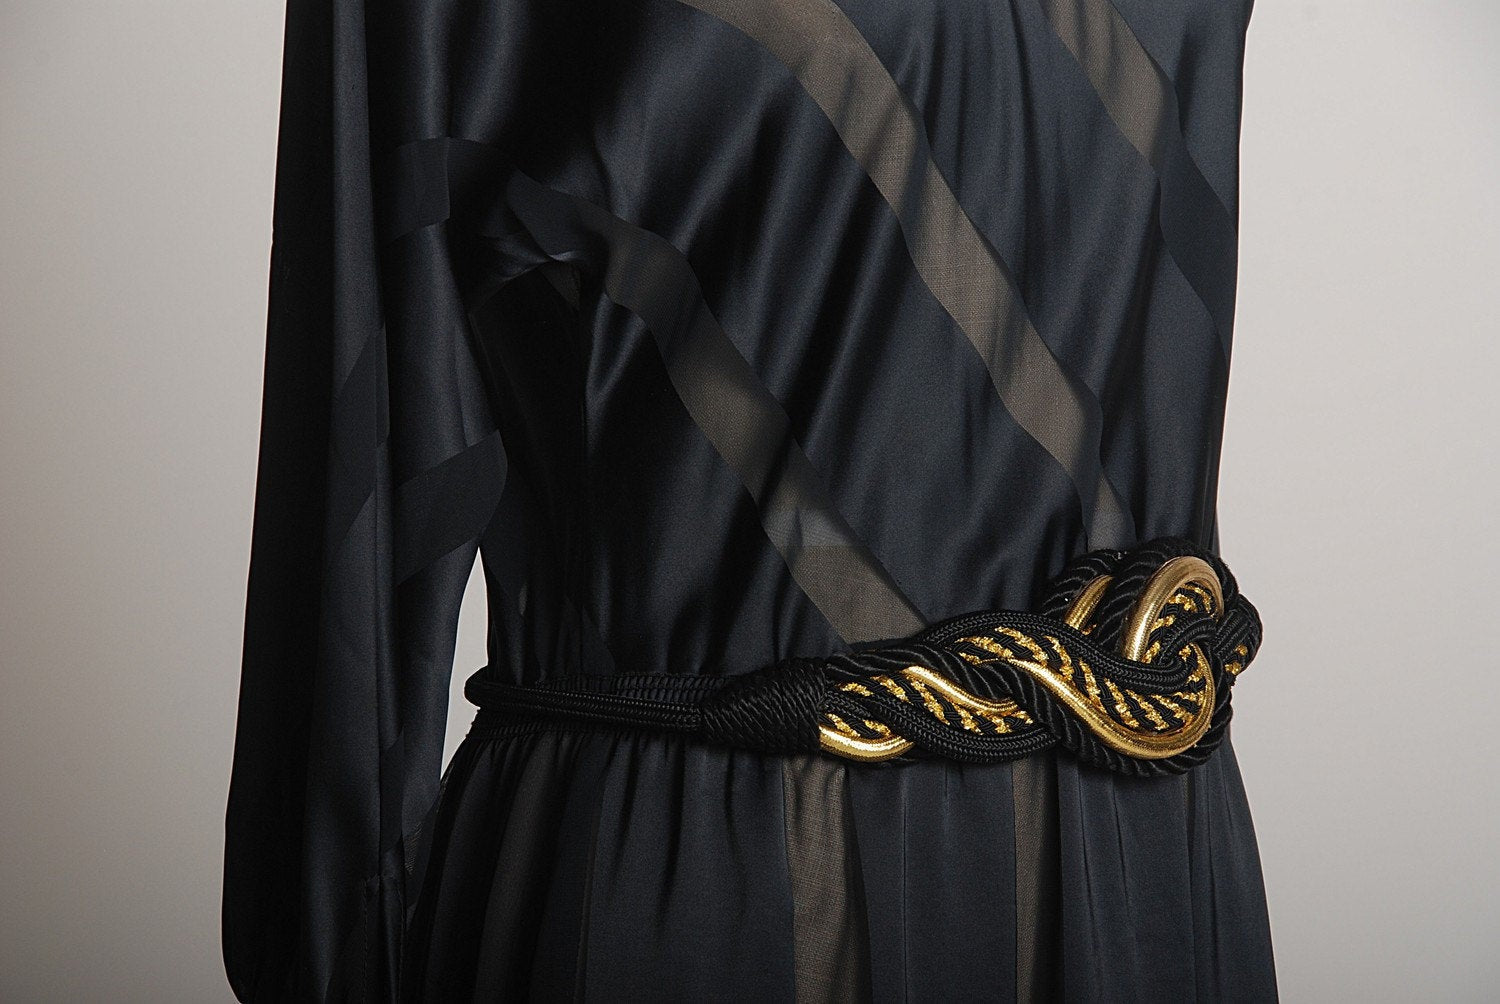 Lbd Sheer Black Dress With Gold Torsal Belt Classic